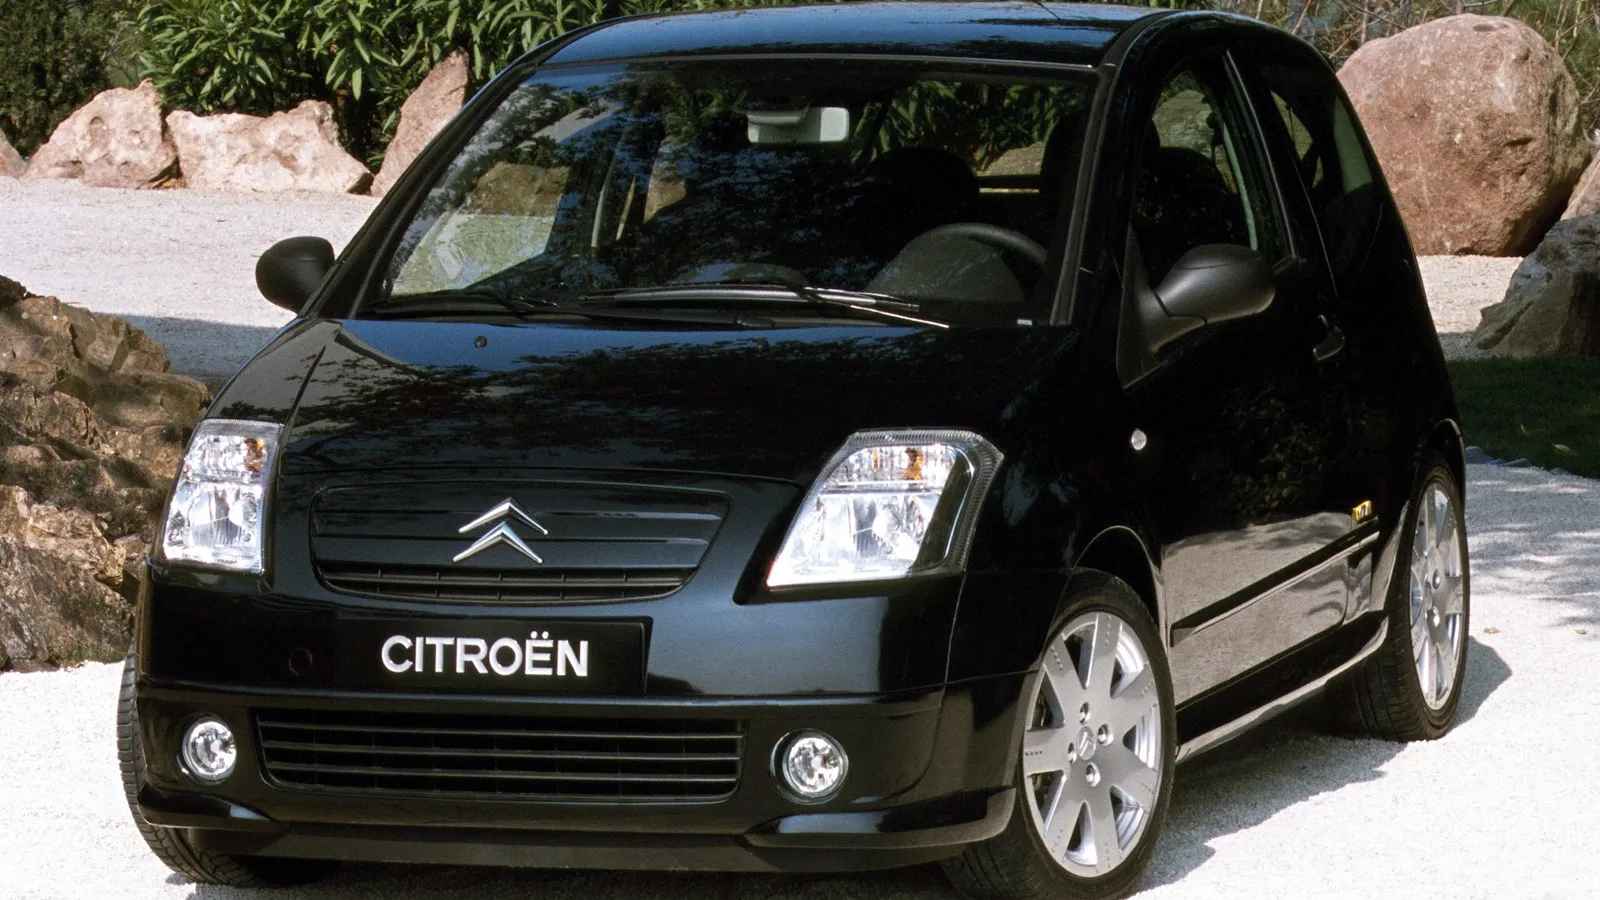 Coche del día: Citroën C2 VTR 1.6 16v